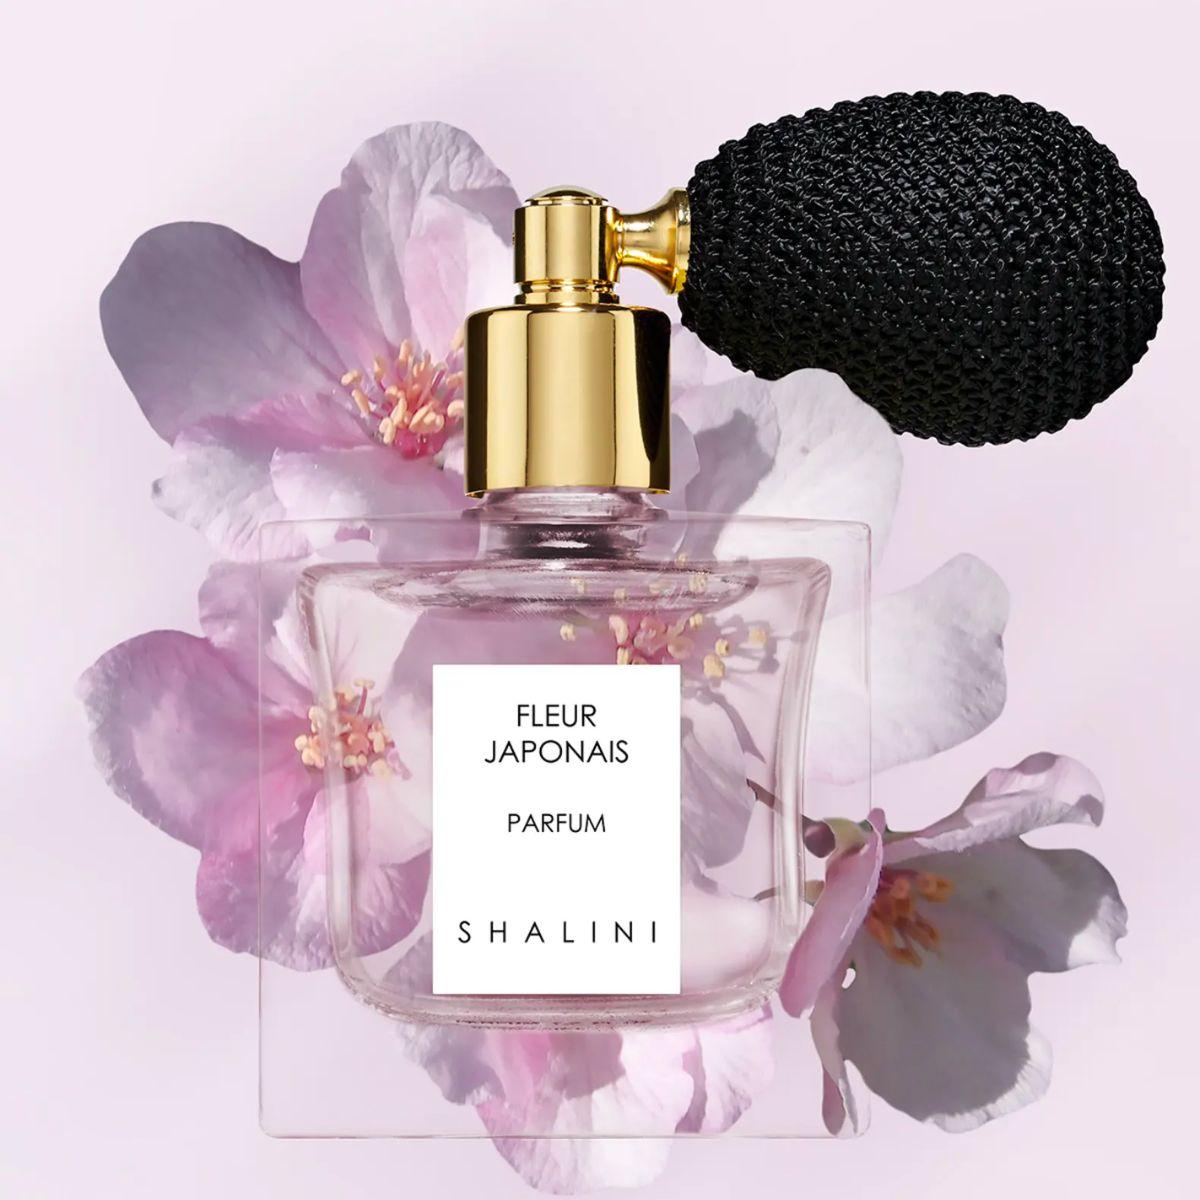 Image of Fleur Japonais bulb atomizer by the perfume brand Shalini